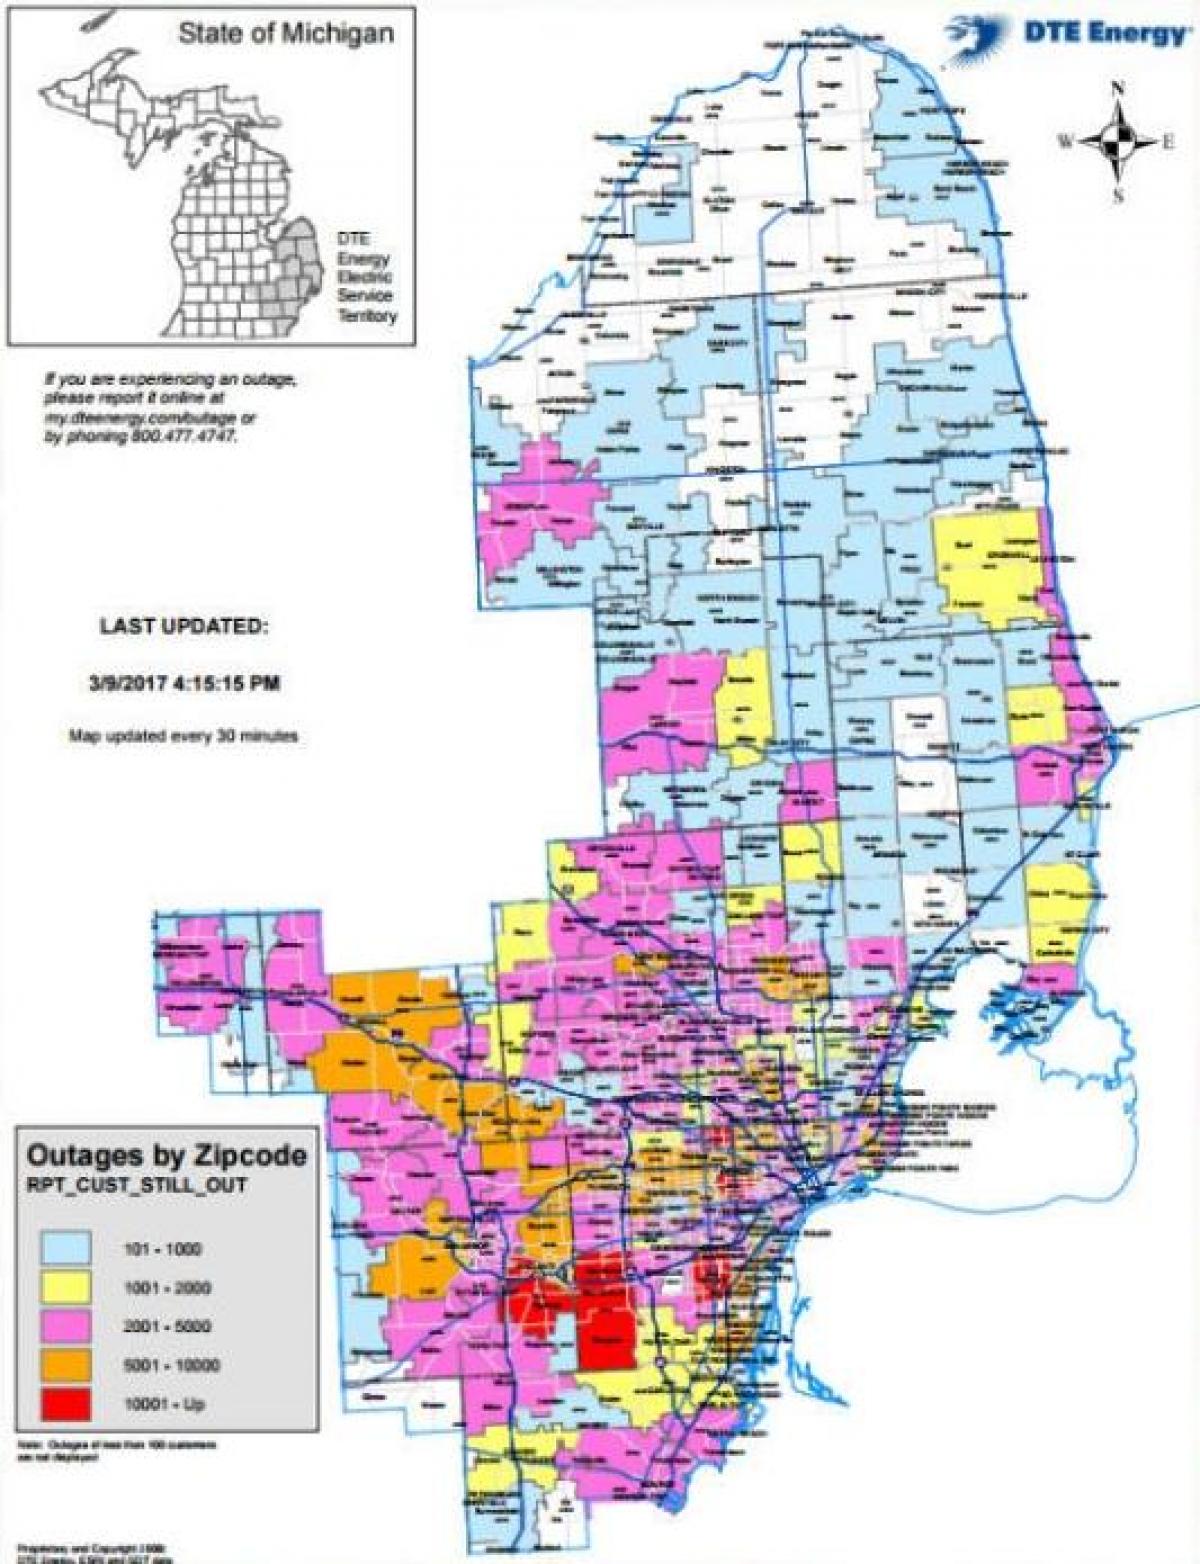 Detroit edison izpadu zemljevid